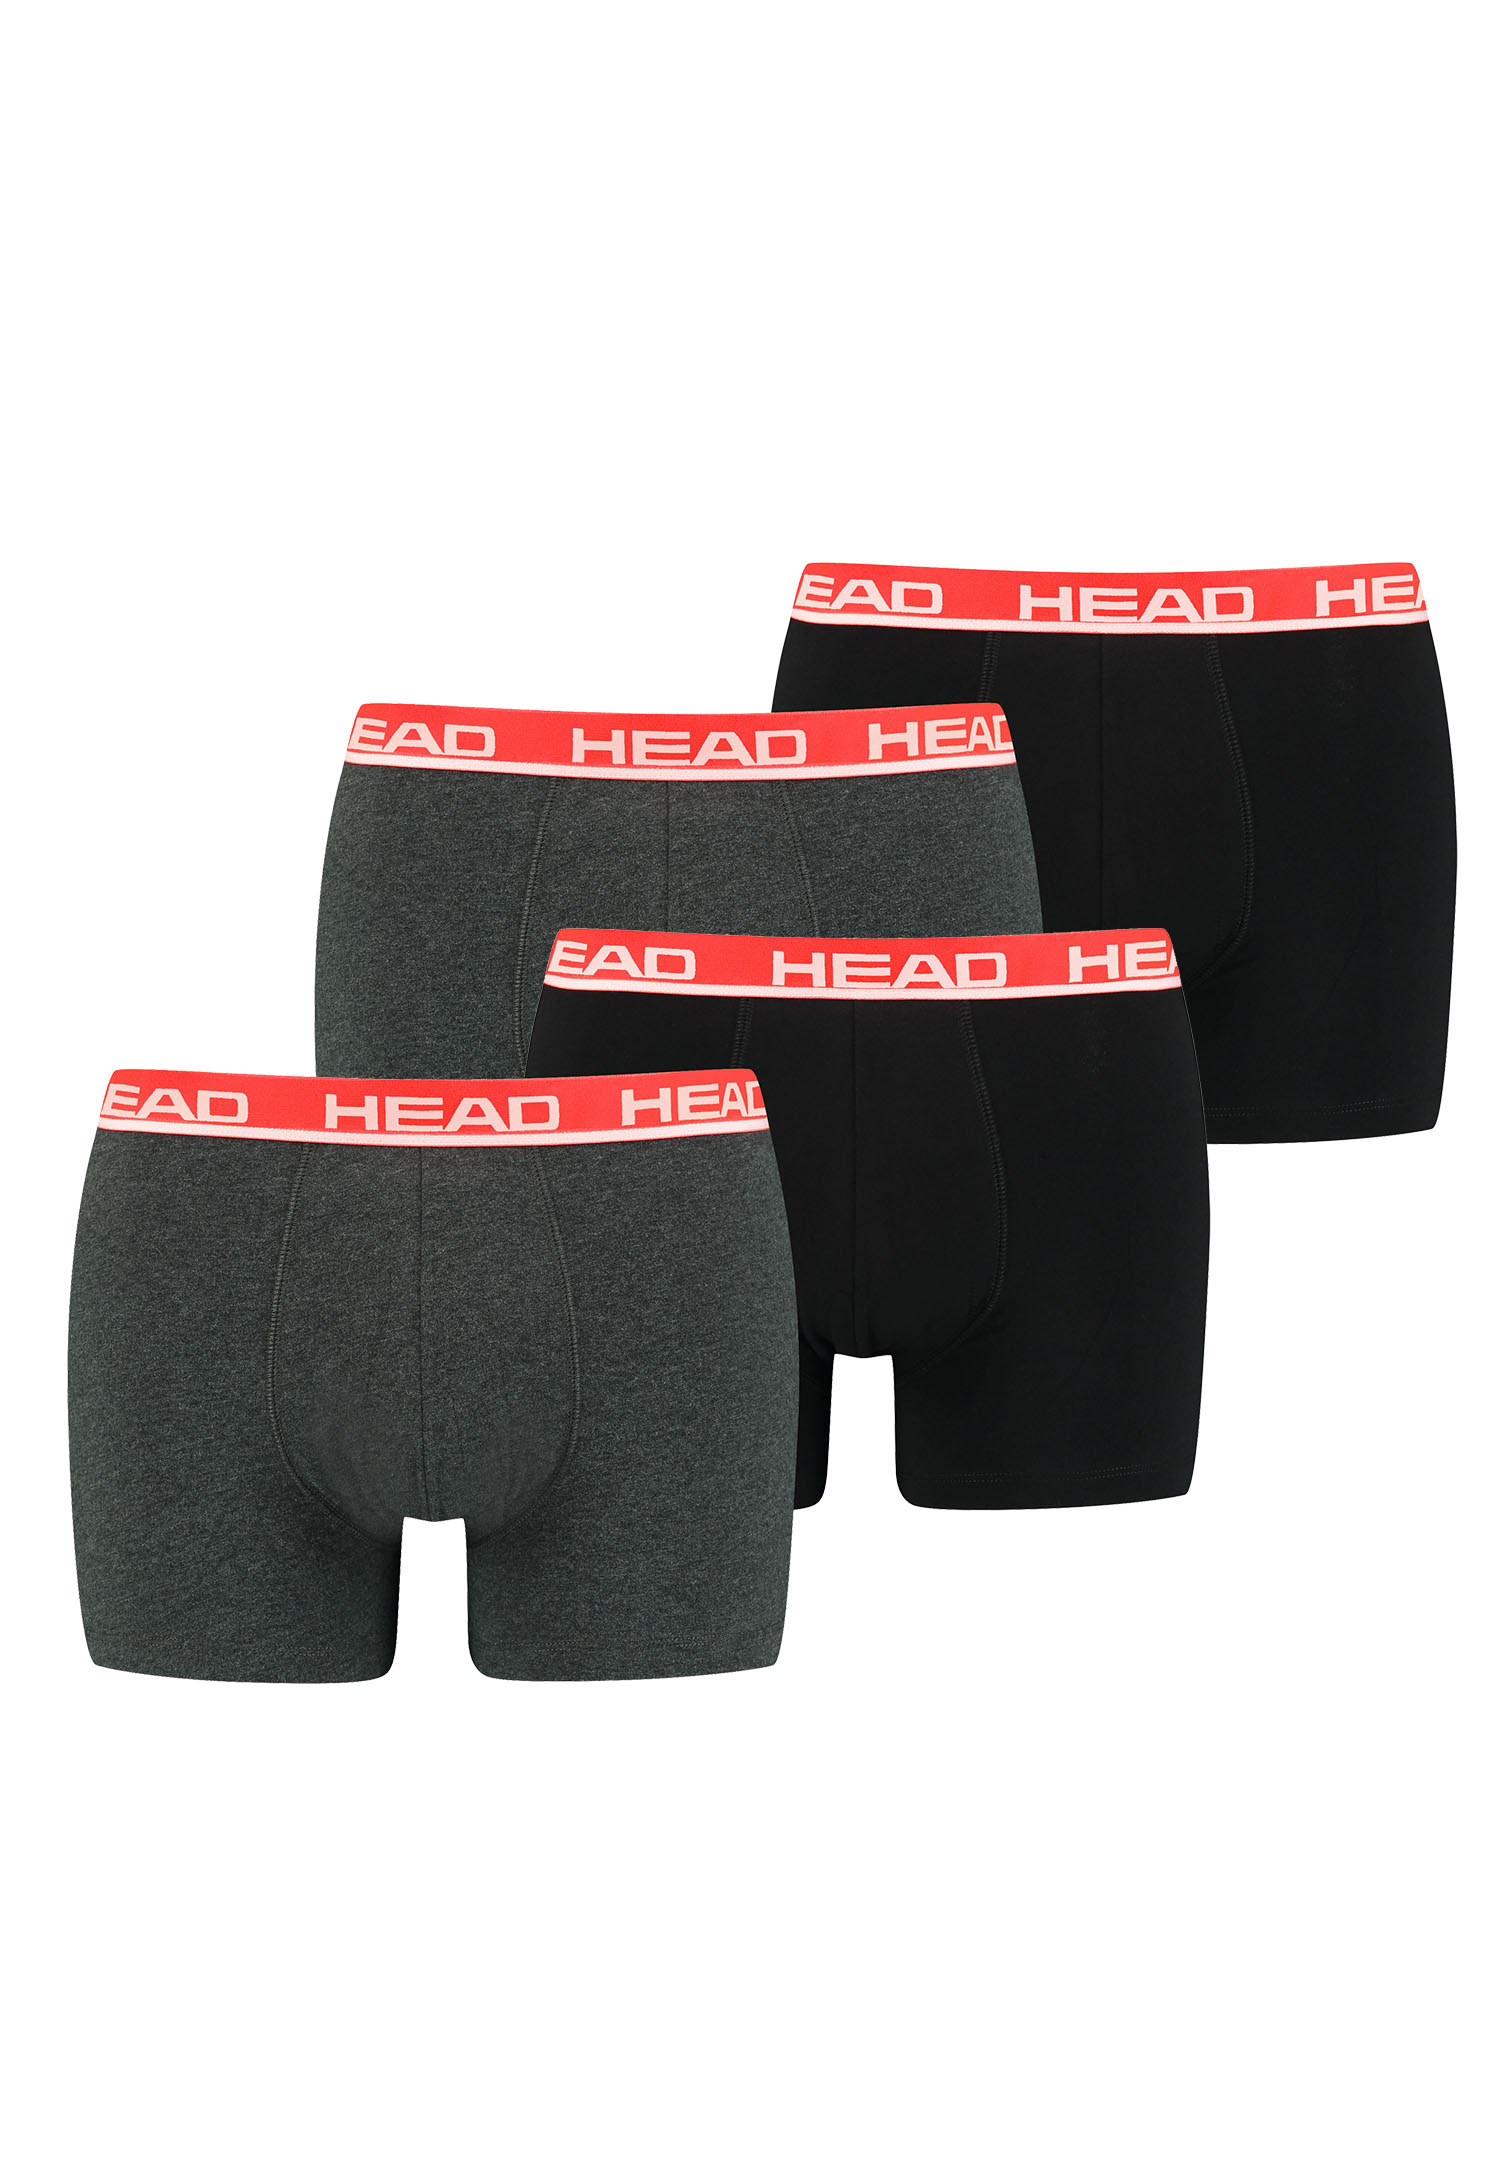 Head Herren Basic Boxer Pant Shorts Unterwäsche Unterhose 4 er Pack